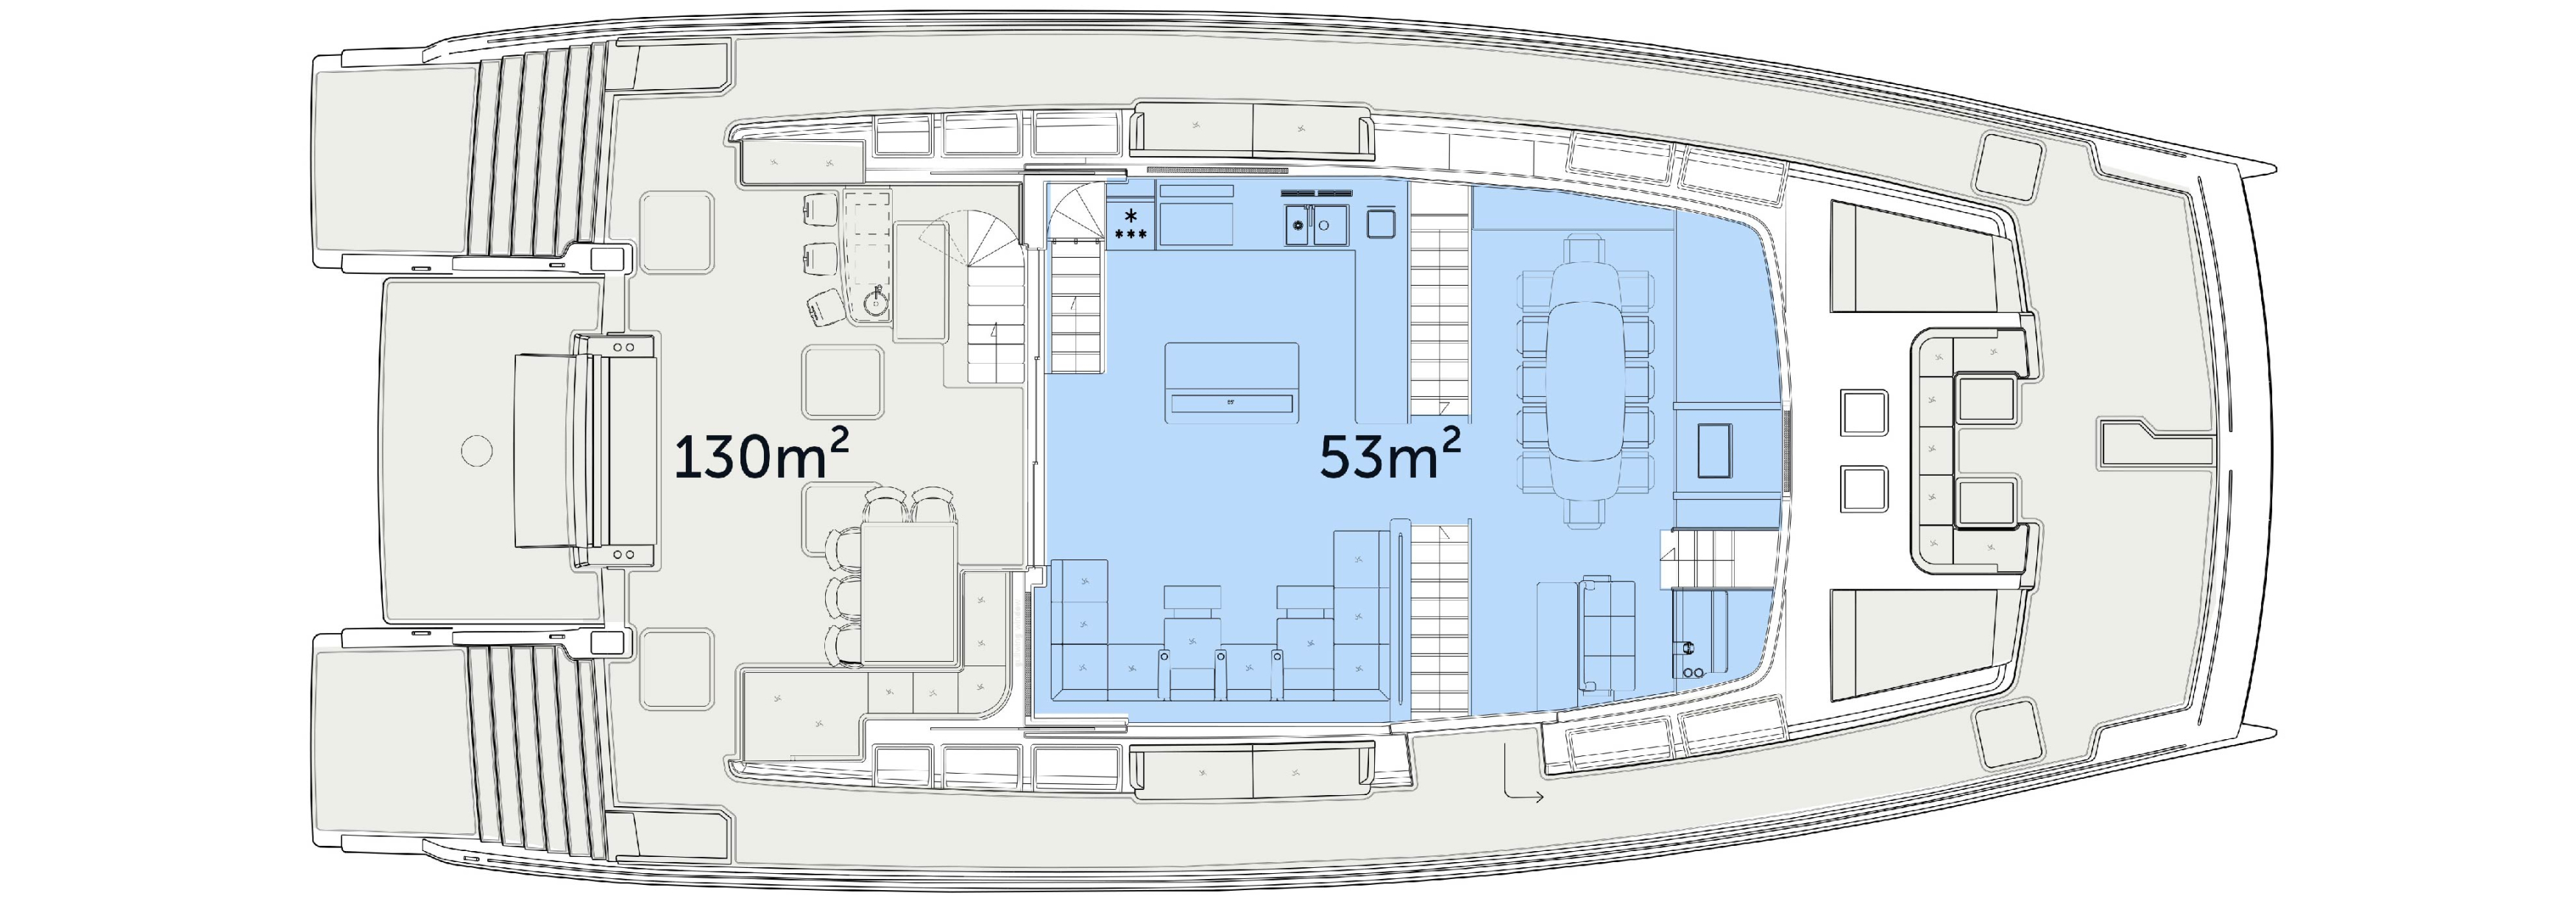 Silent 80 yacht main deck area plan